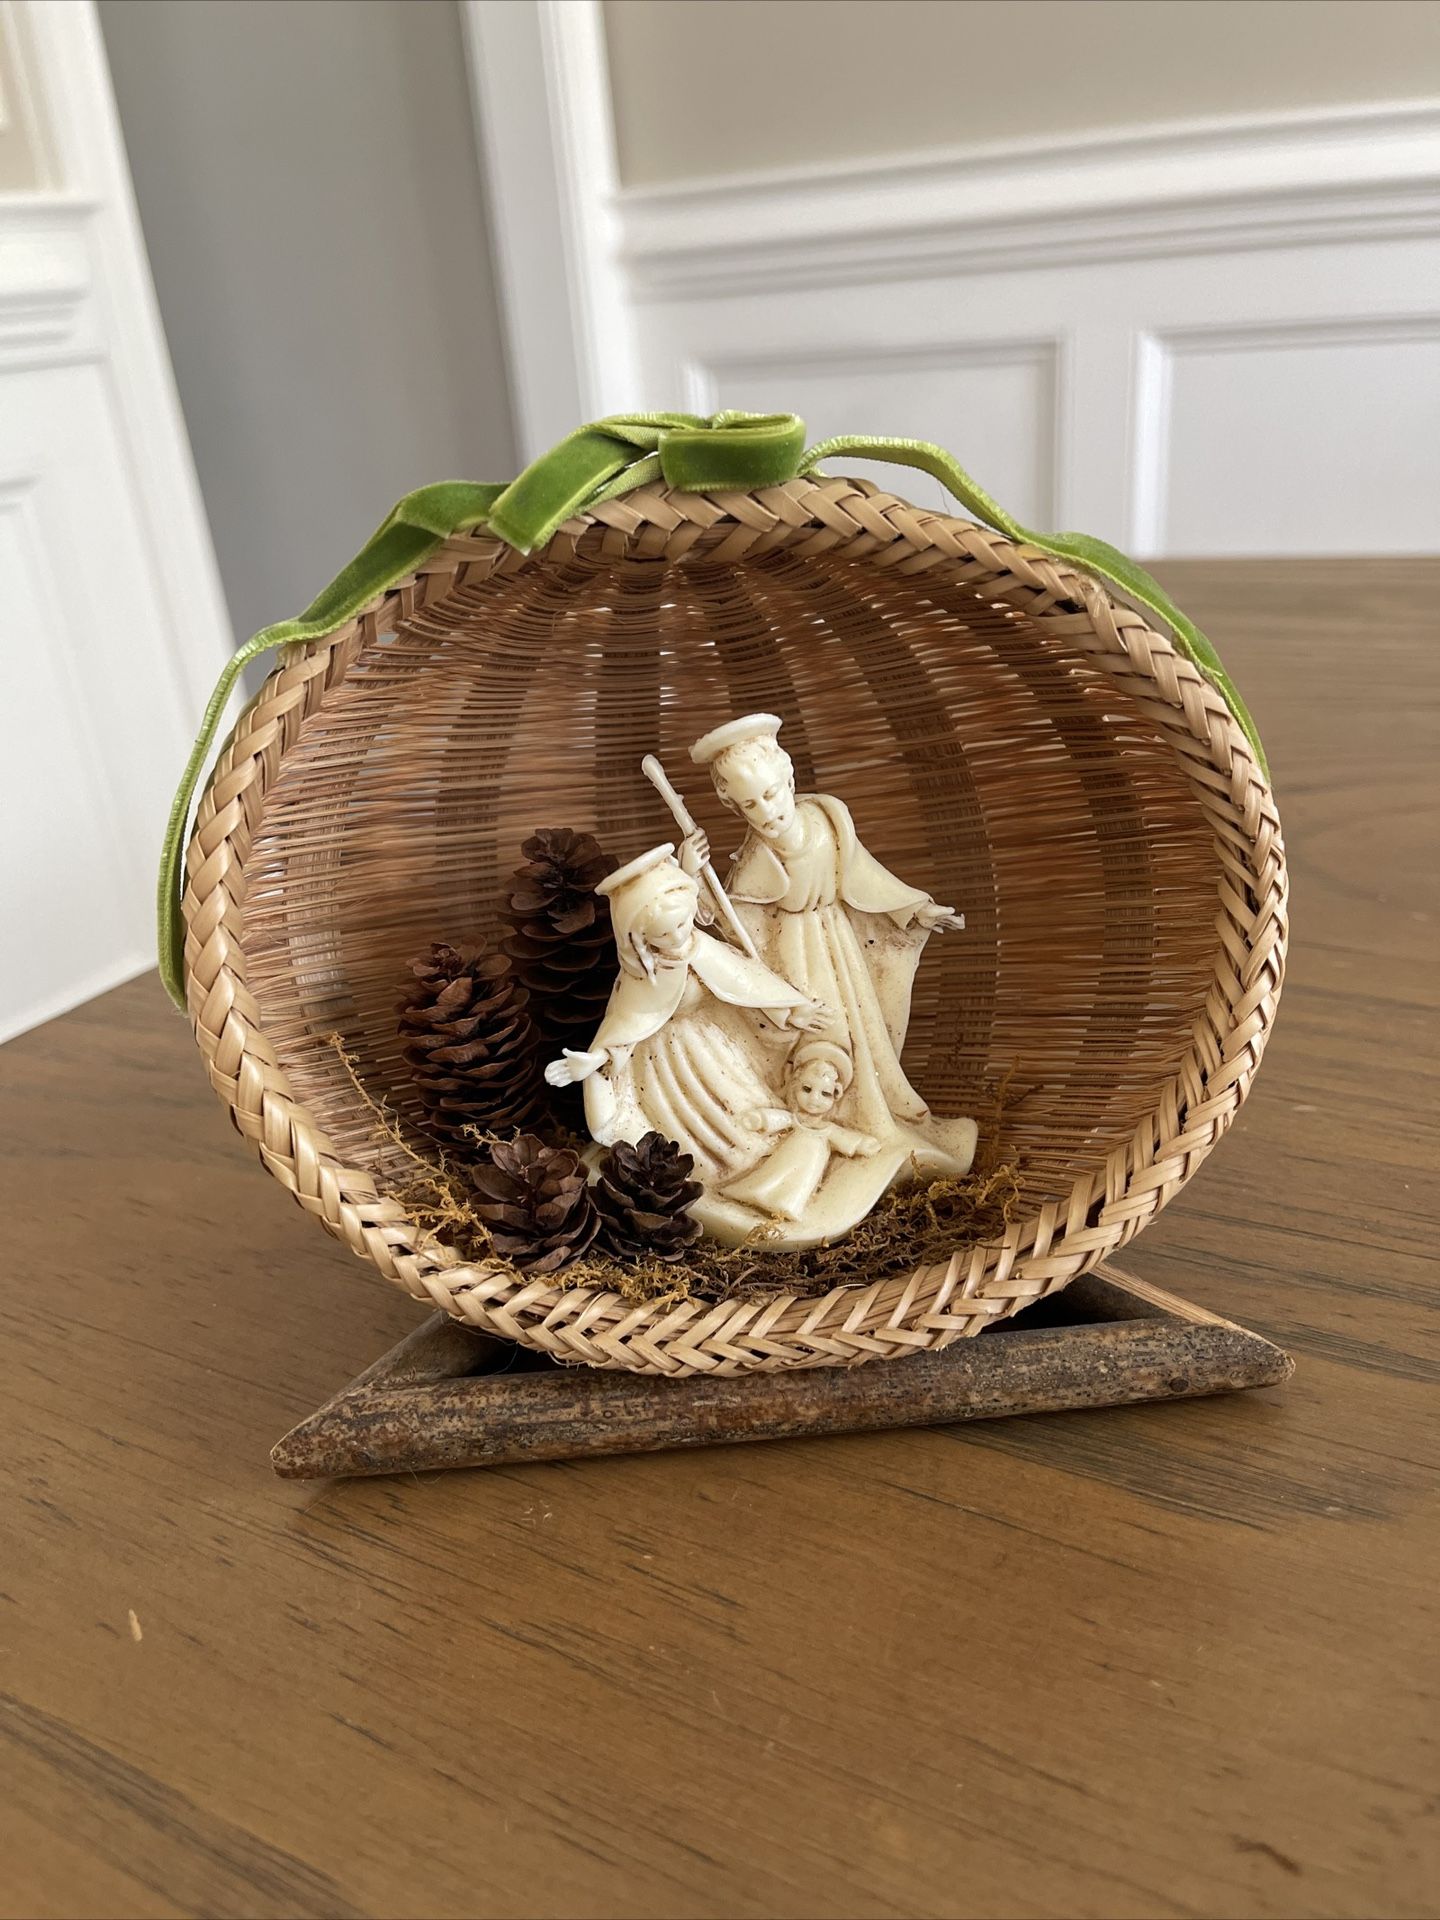 Holy Family Figurine, Nativity Scene 3D Statue in basket